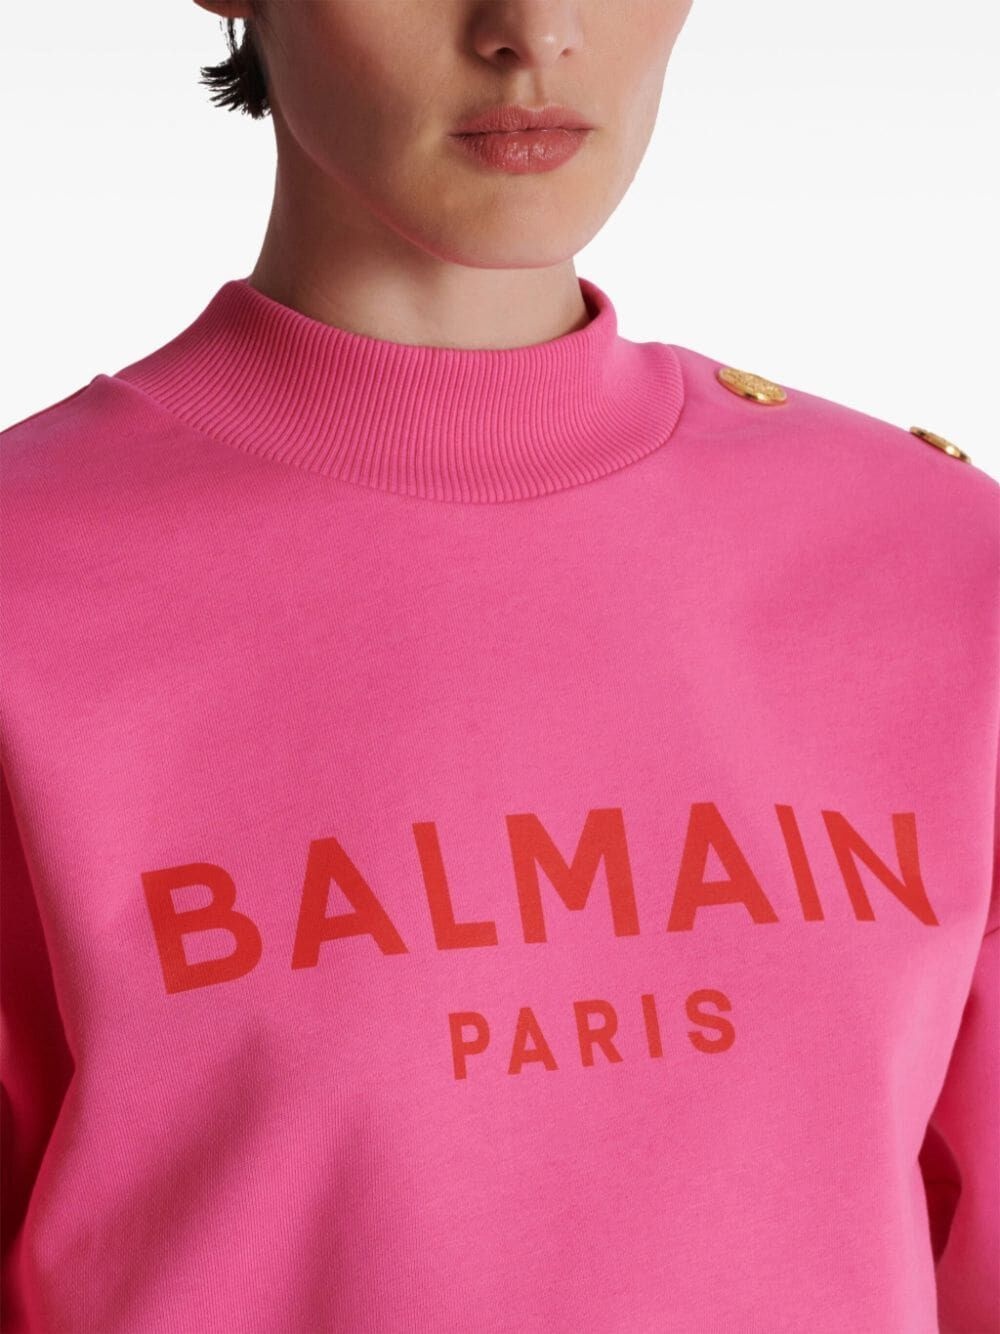 Cropped sweatshirt with balmain paris print - 7